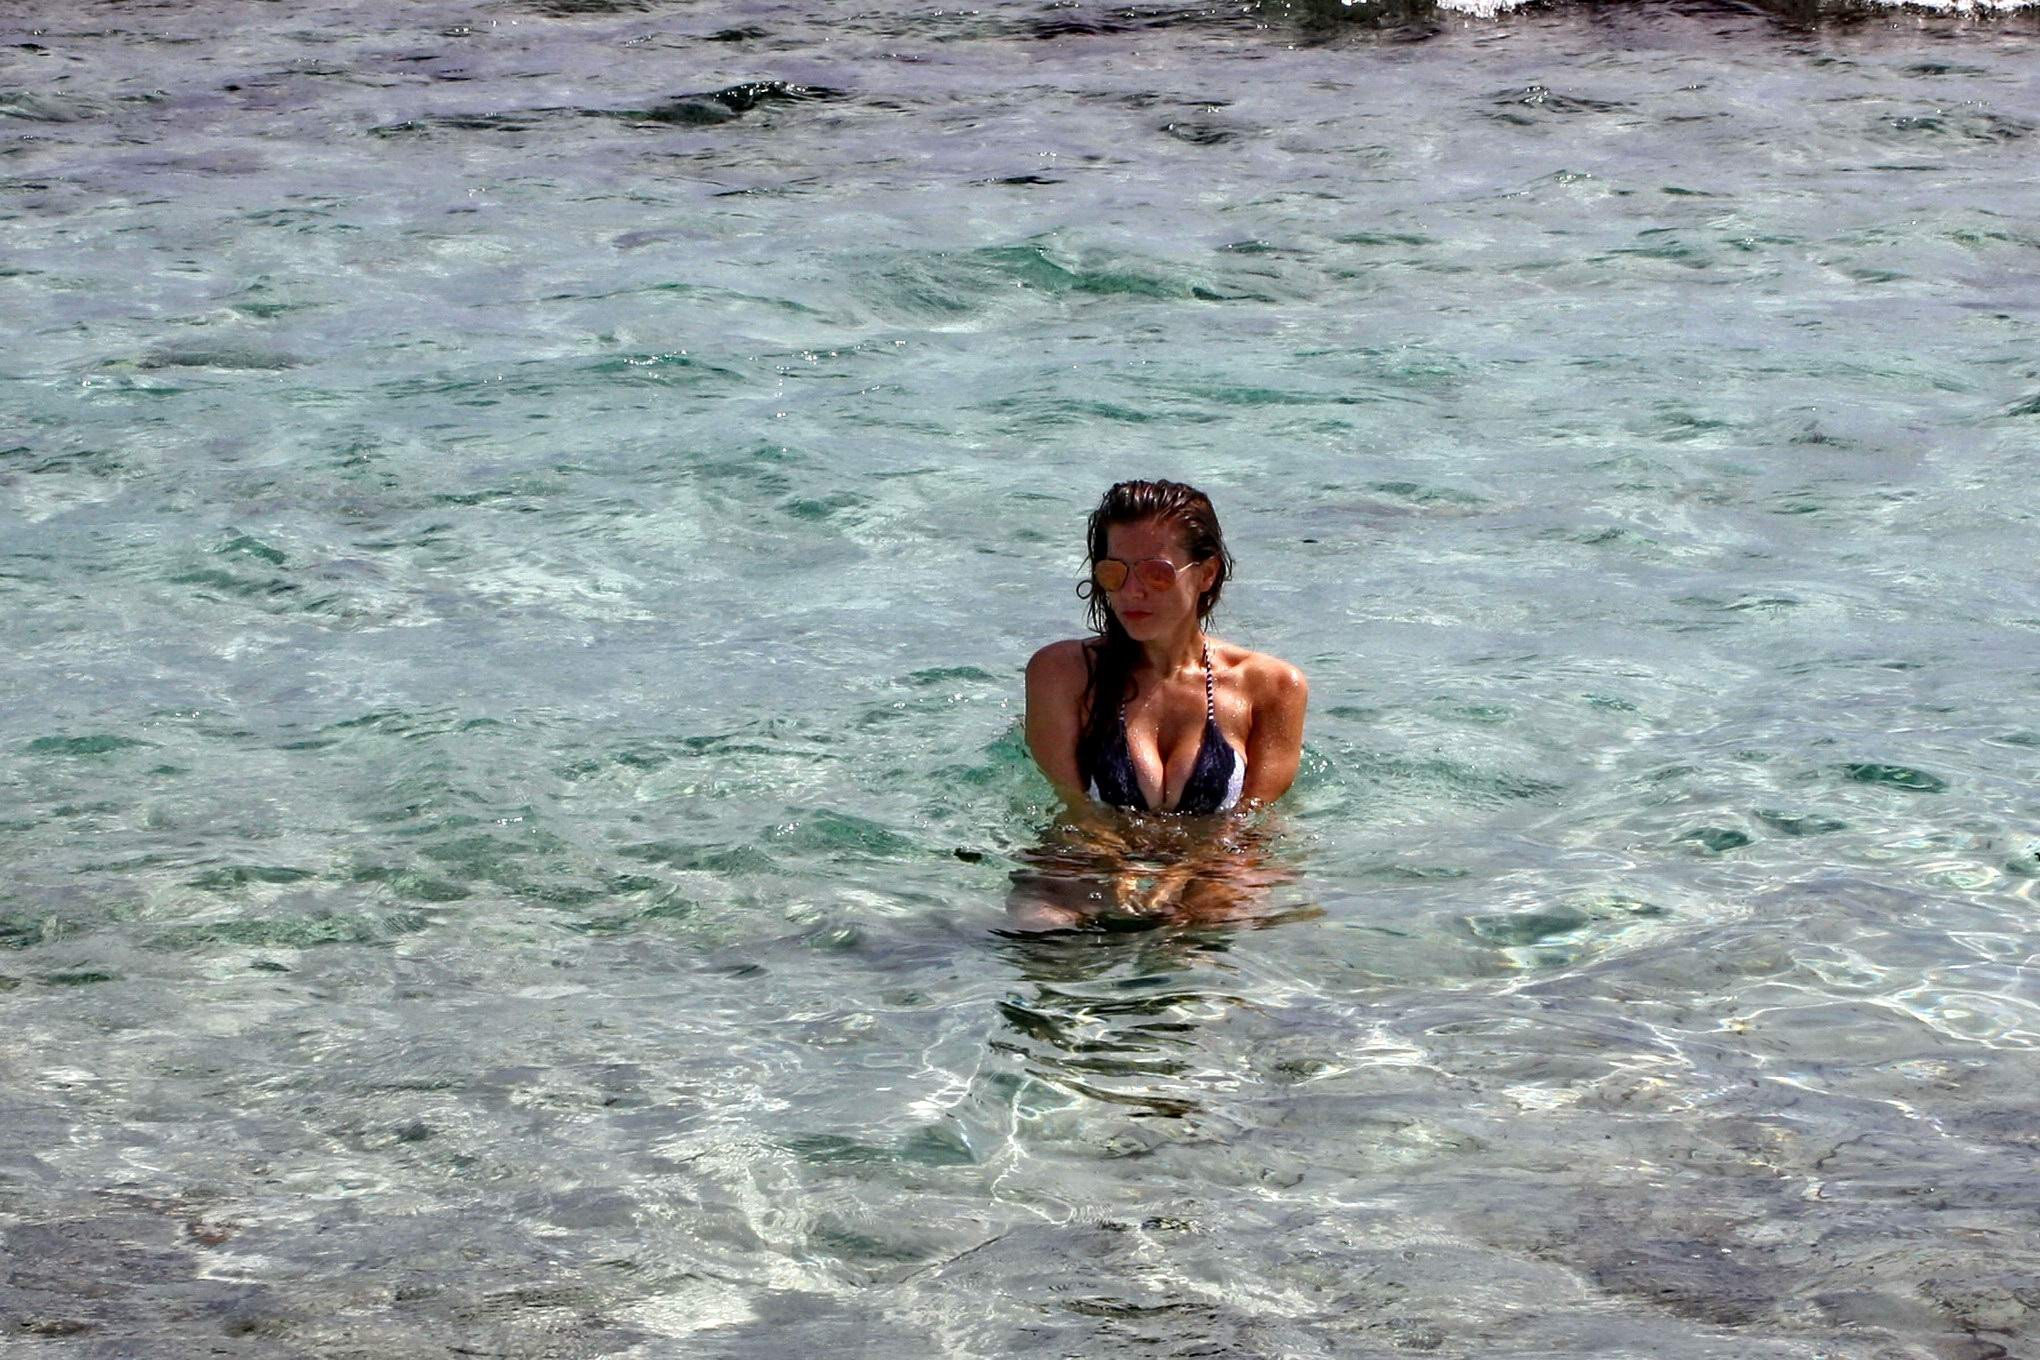 Imogen Thomas shows off her curvy body wearing a skimpy monochrome bikini on a b